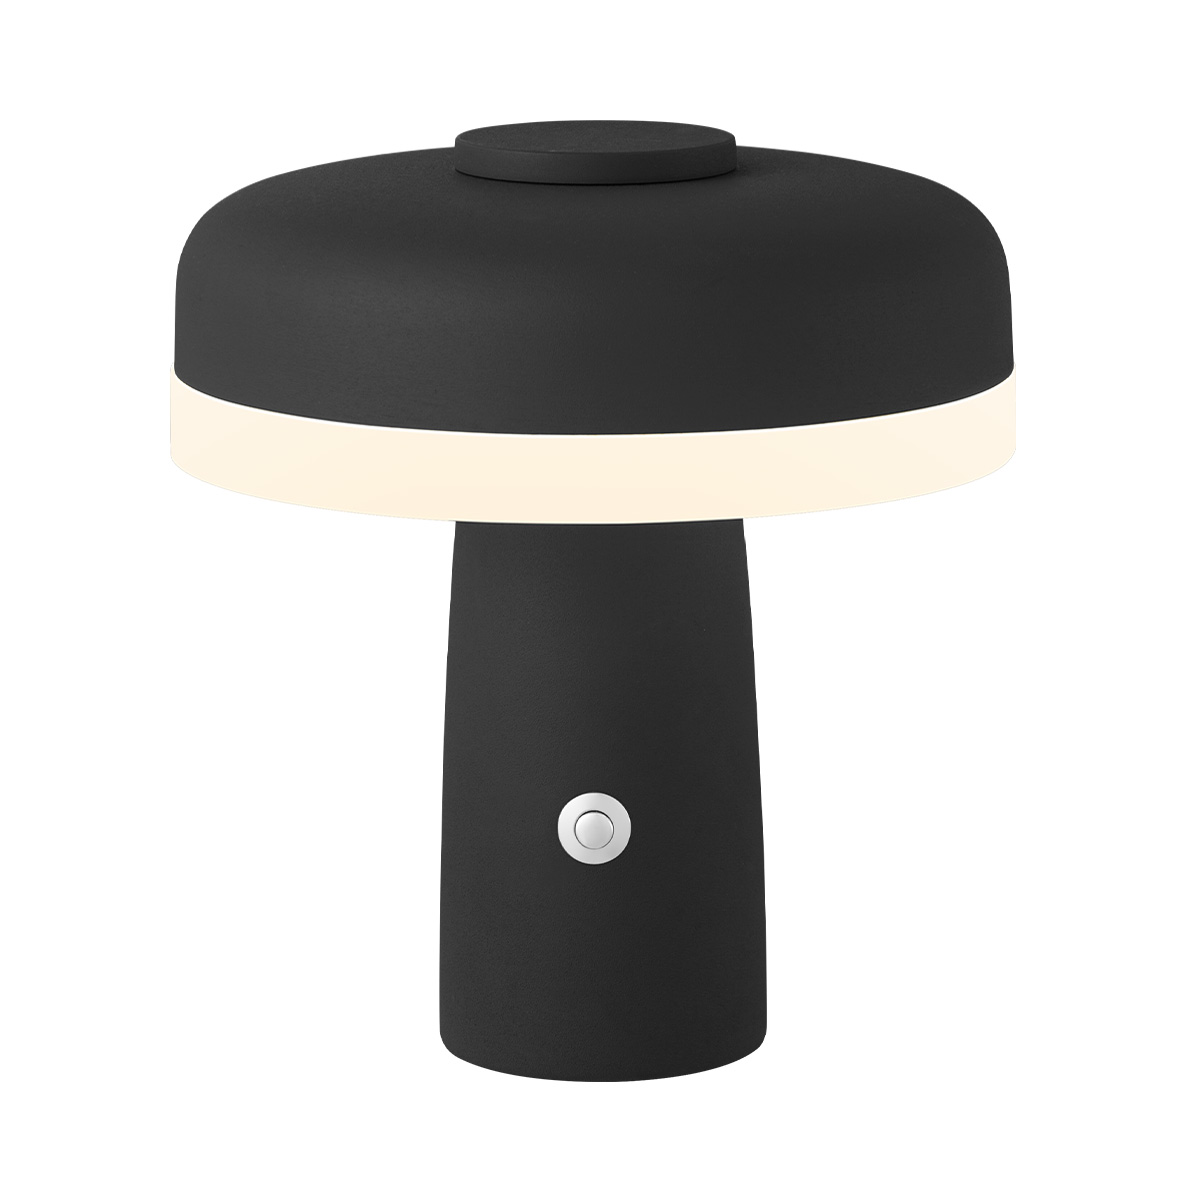 Tangla lighting - TLT7499-01SB - LED Table lamp - rechargeable metal and glass - sand black - rechargeable